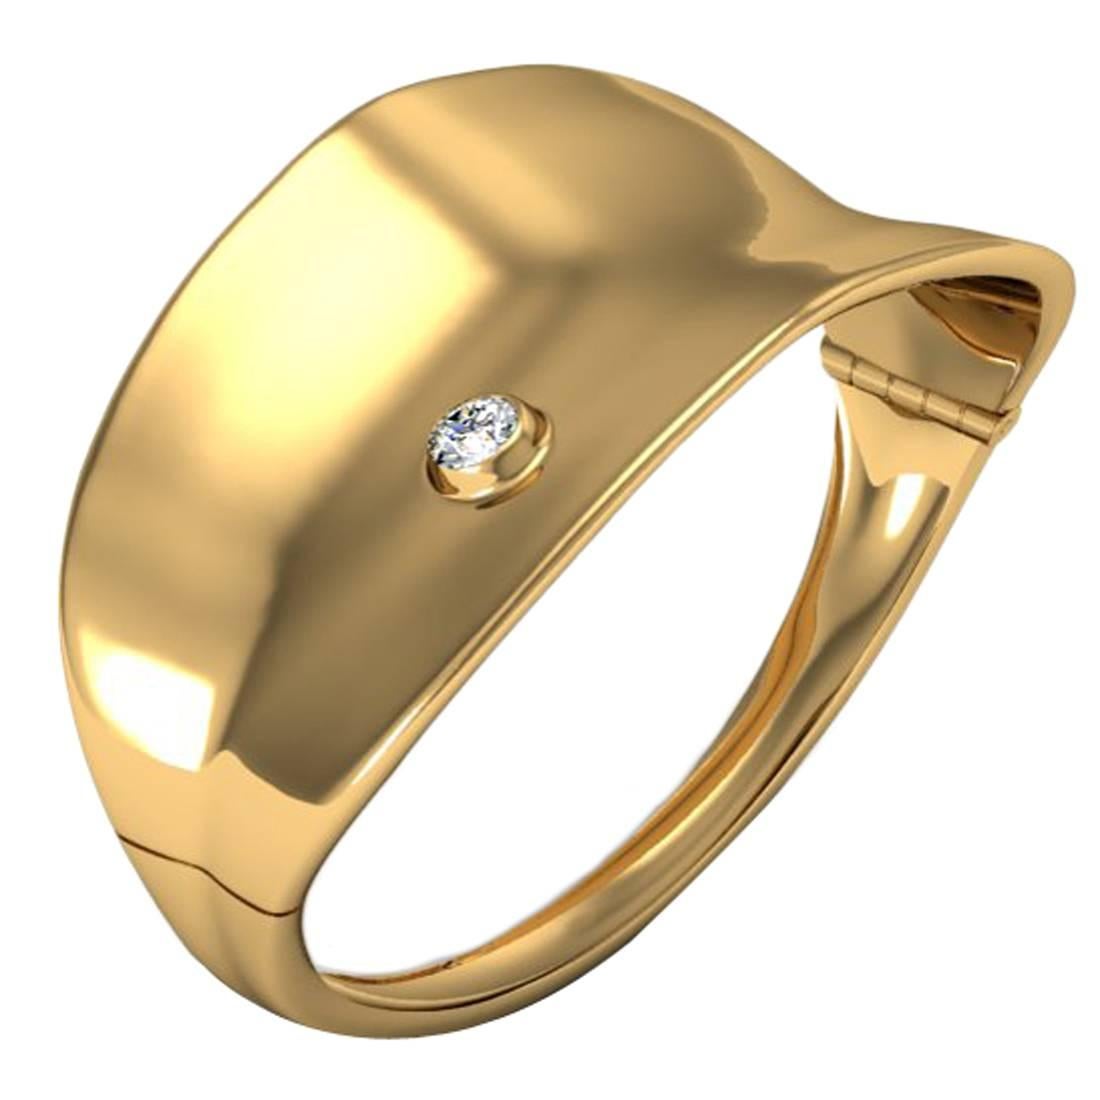 Ini Archibong & Sparkles Diamond and Gold Bracelet For Sale